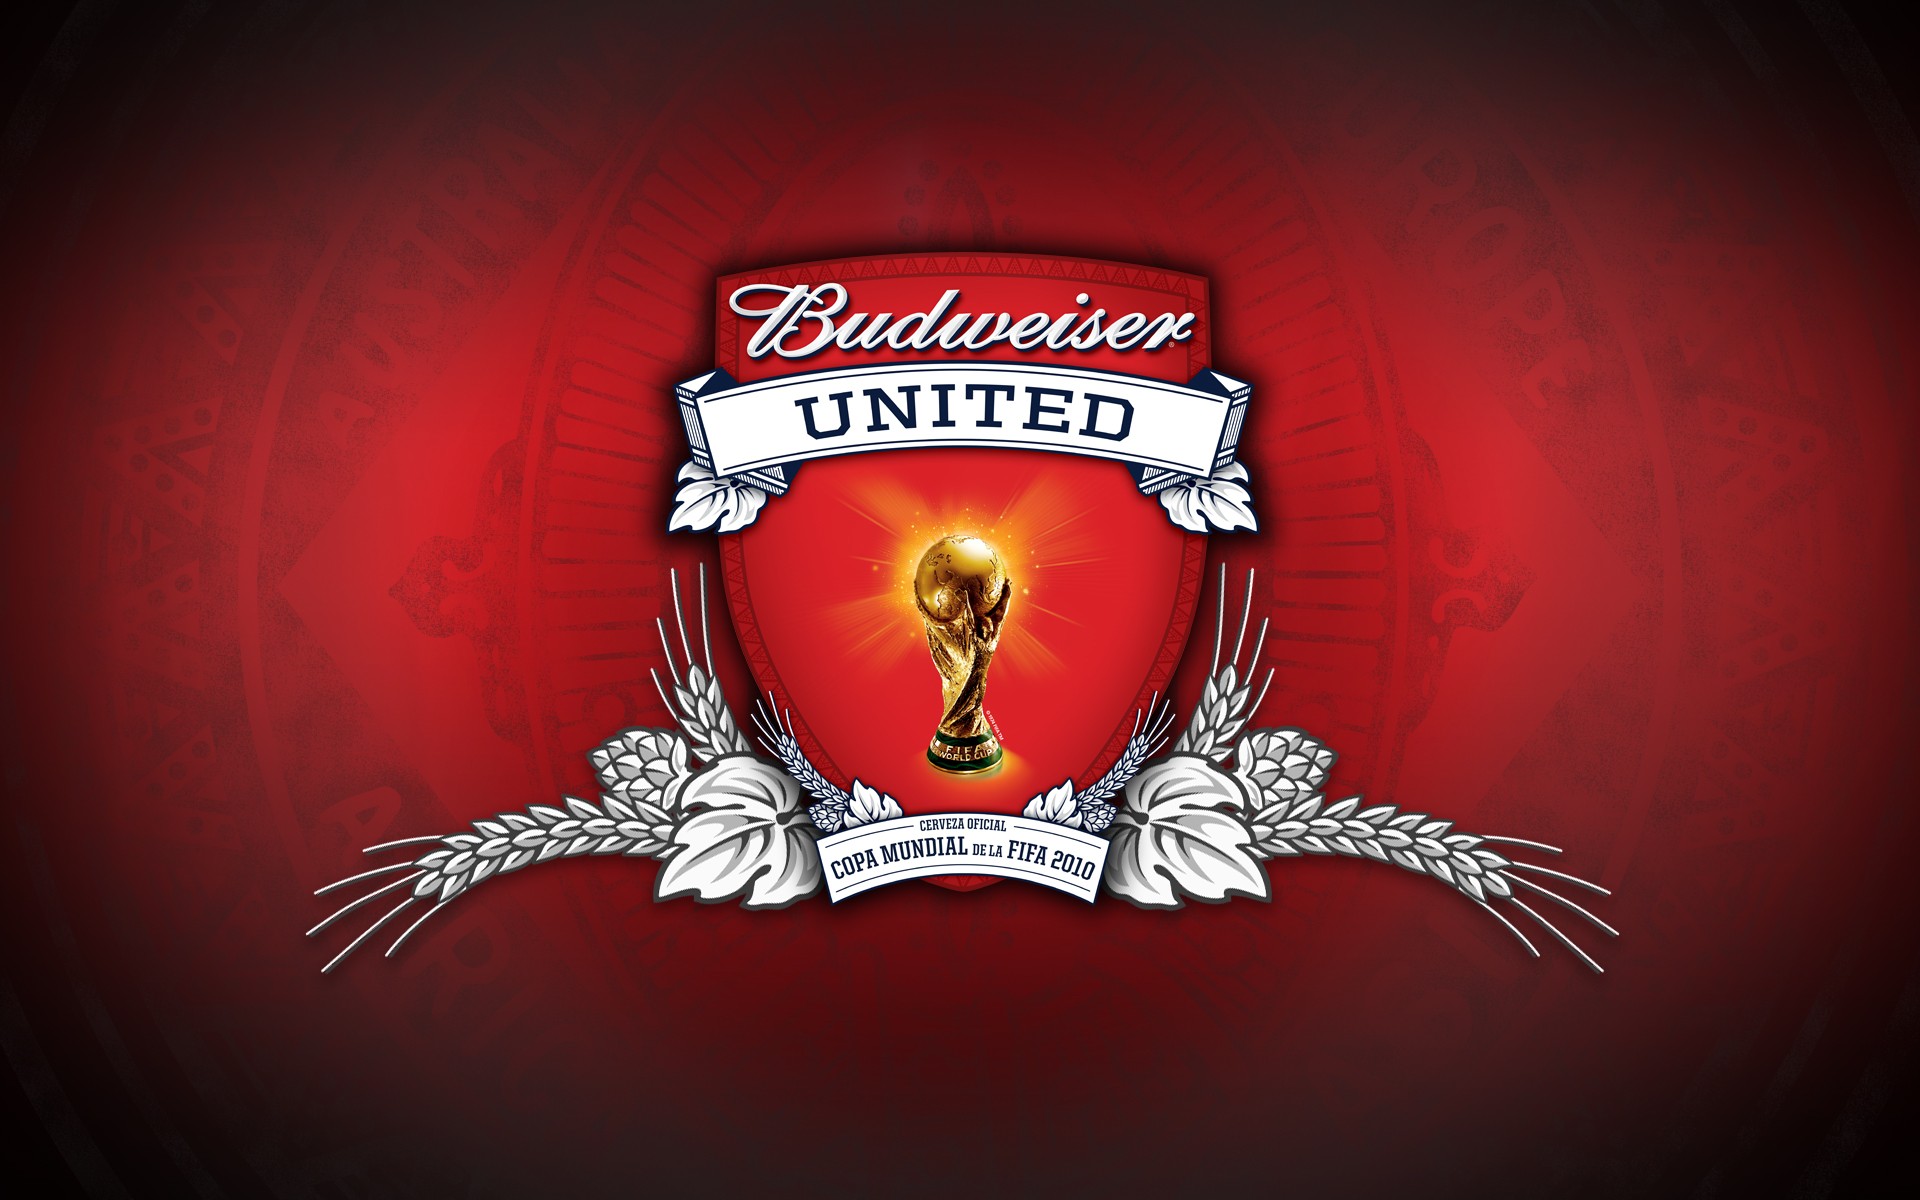 Budweiser United Soccer Edition Wide Image Brands Ads